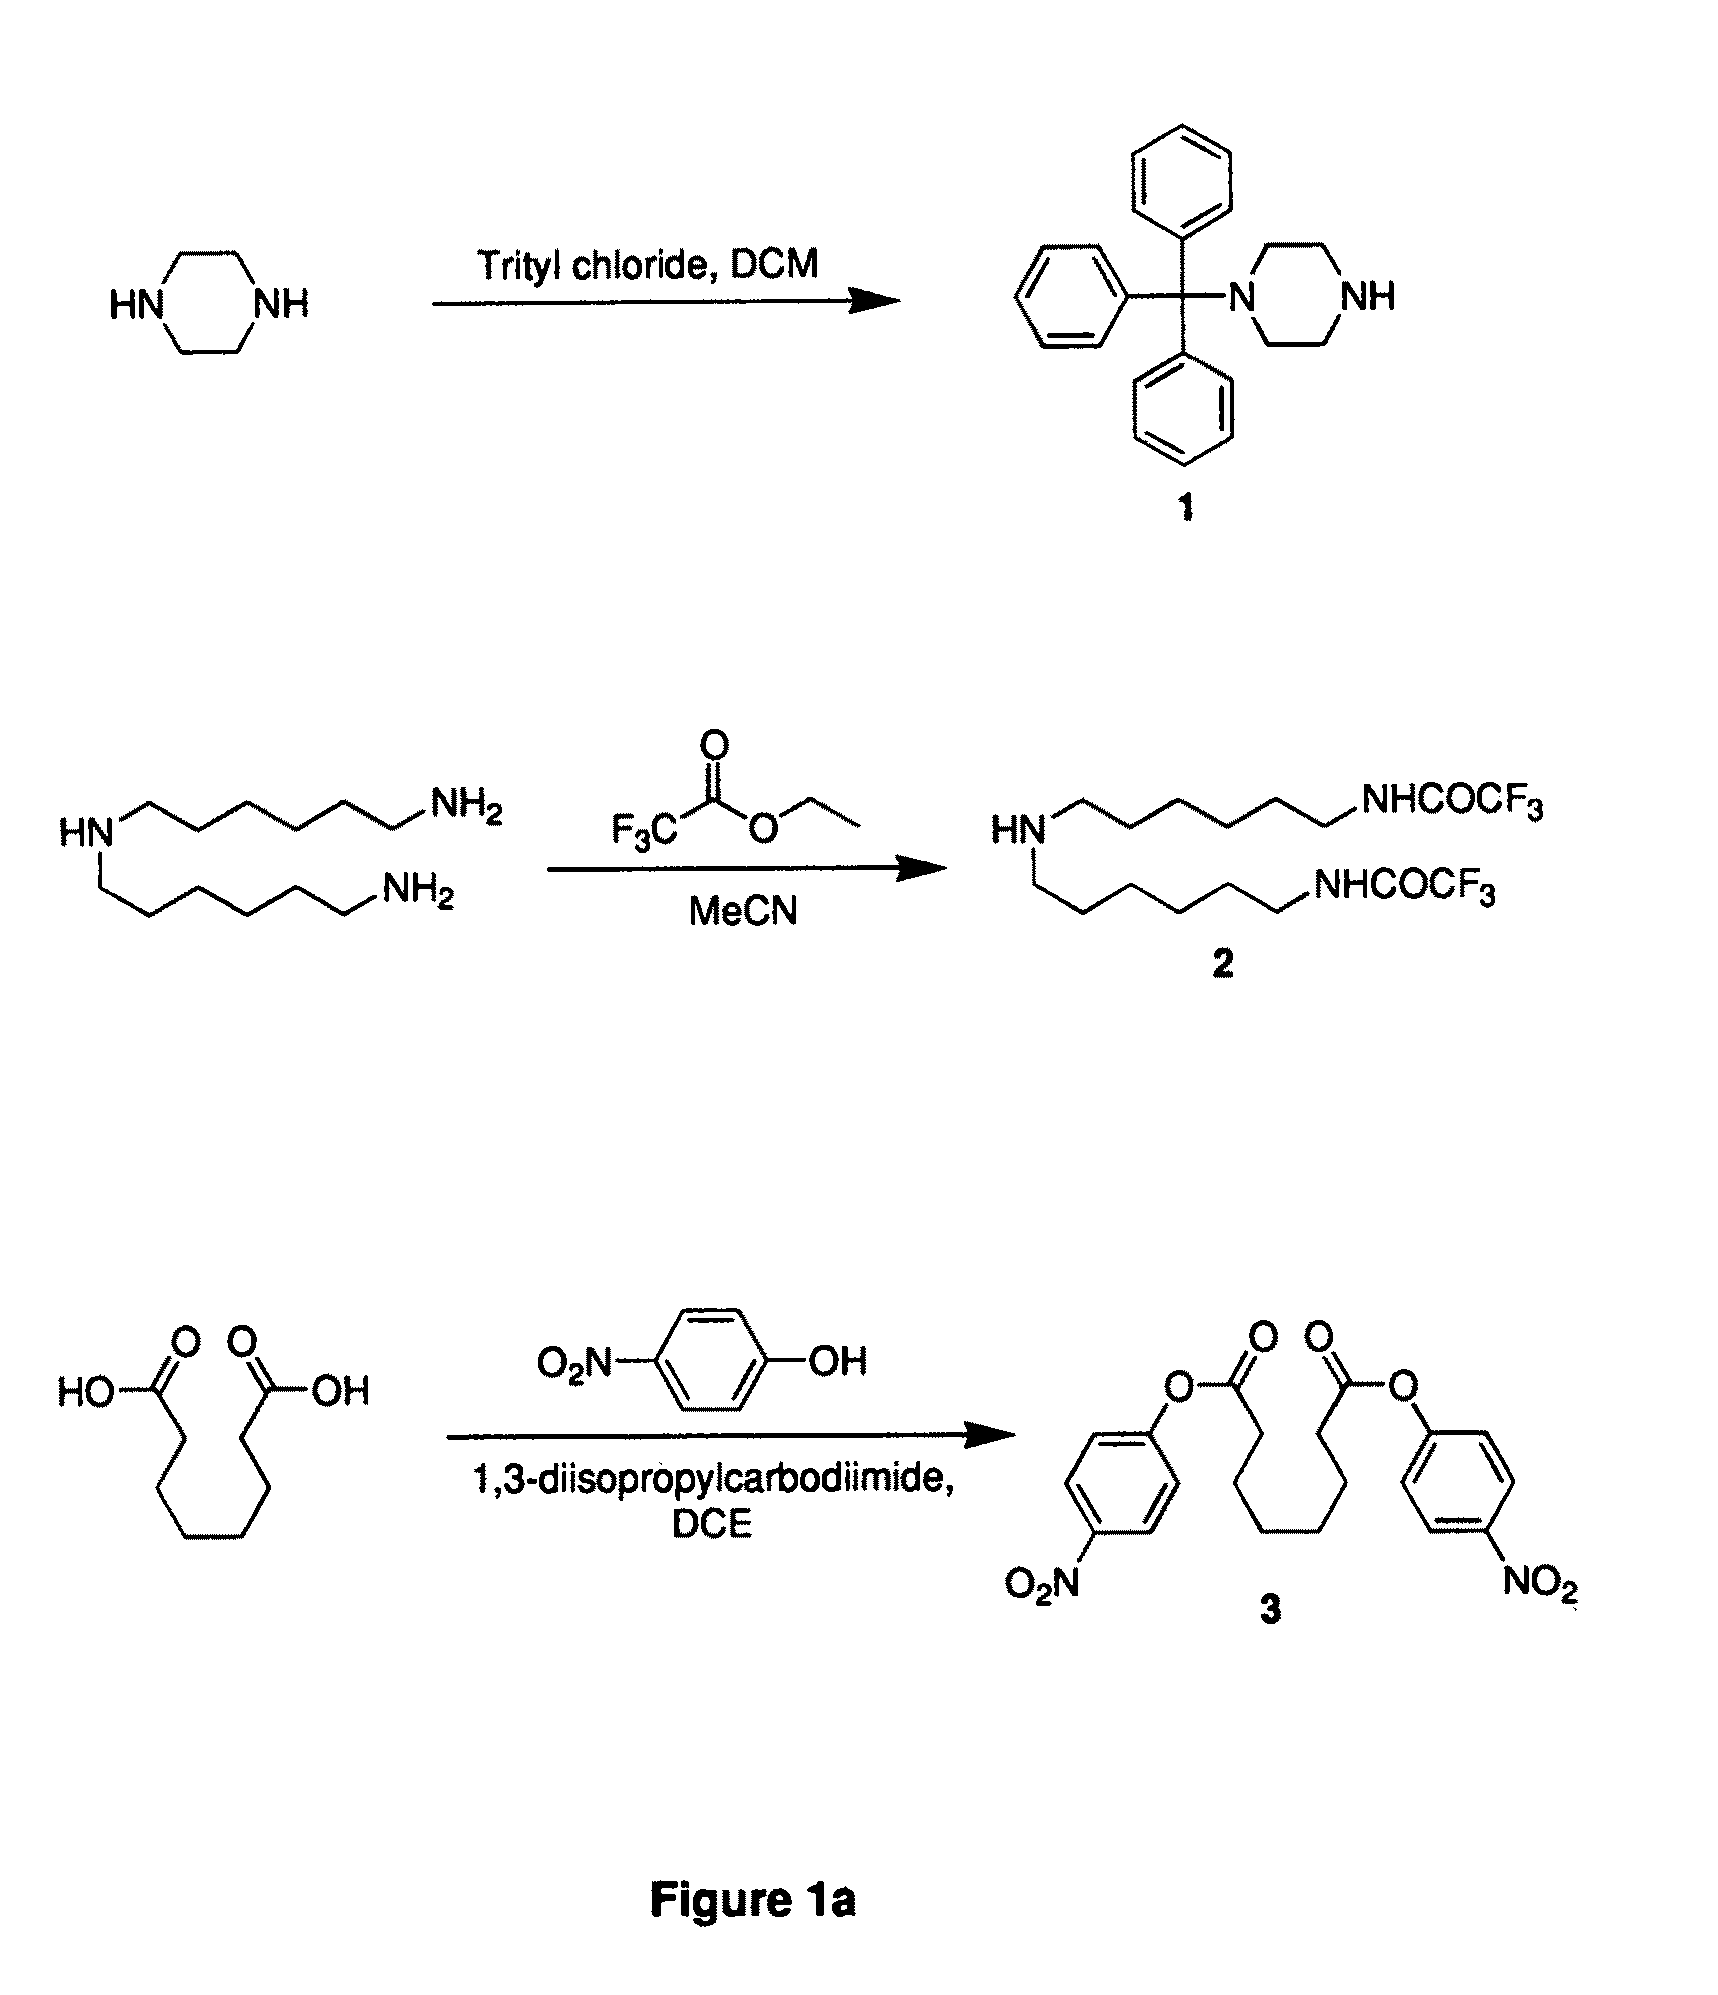 Molecular transporter compositions comprising dendrimeric oligoguanidine with a triazine core that facilitate delivery into cells in vivo